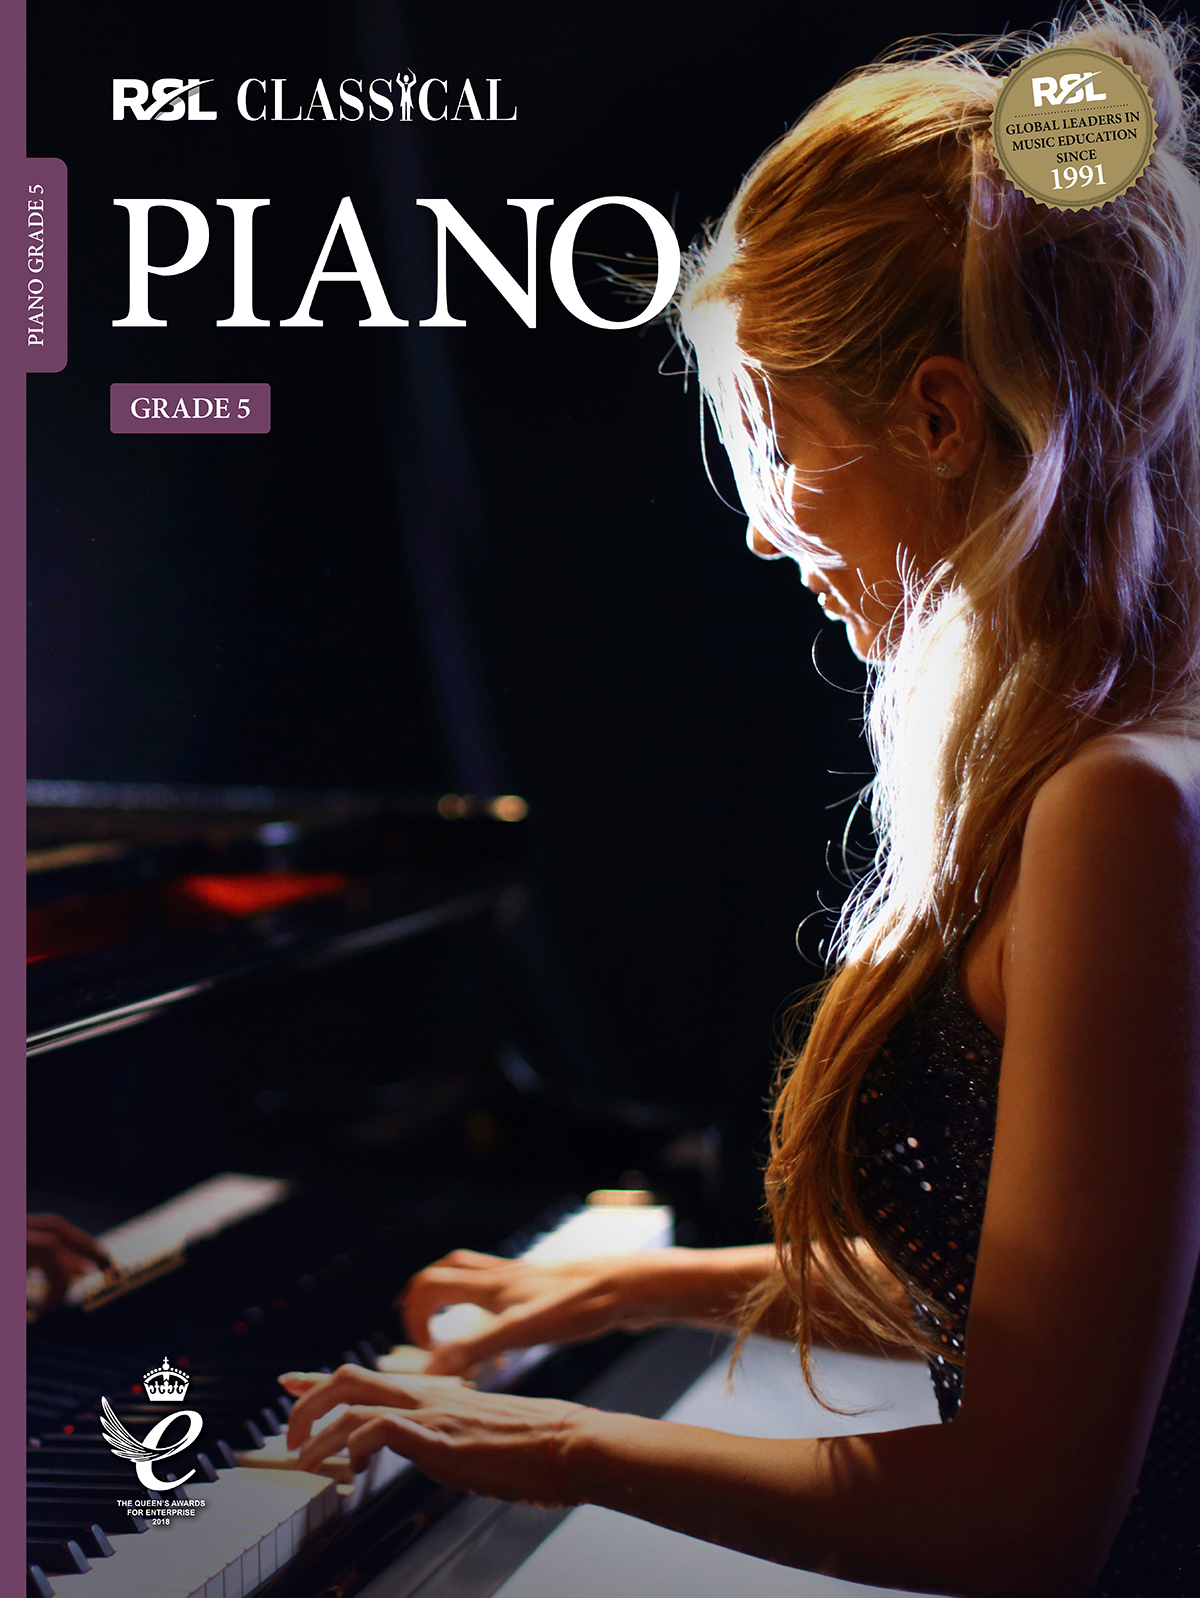 RSL CLASSICAL PIANO GRADE 5 2021 古典鋼琴檢定參考歌本 RSK200143